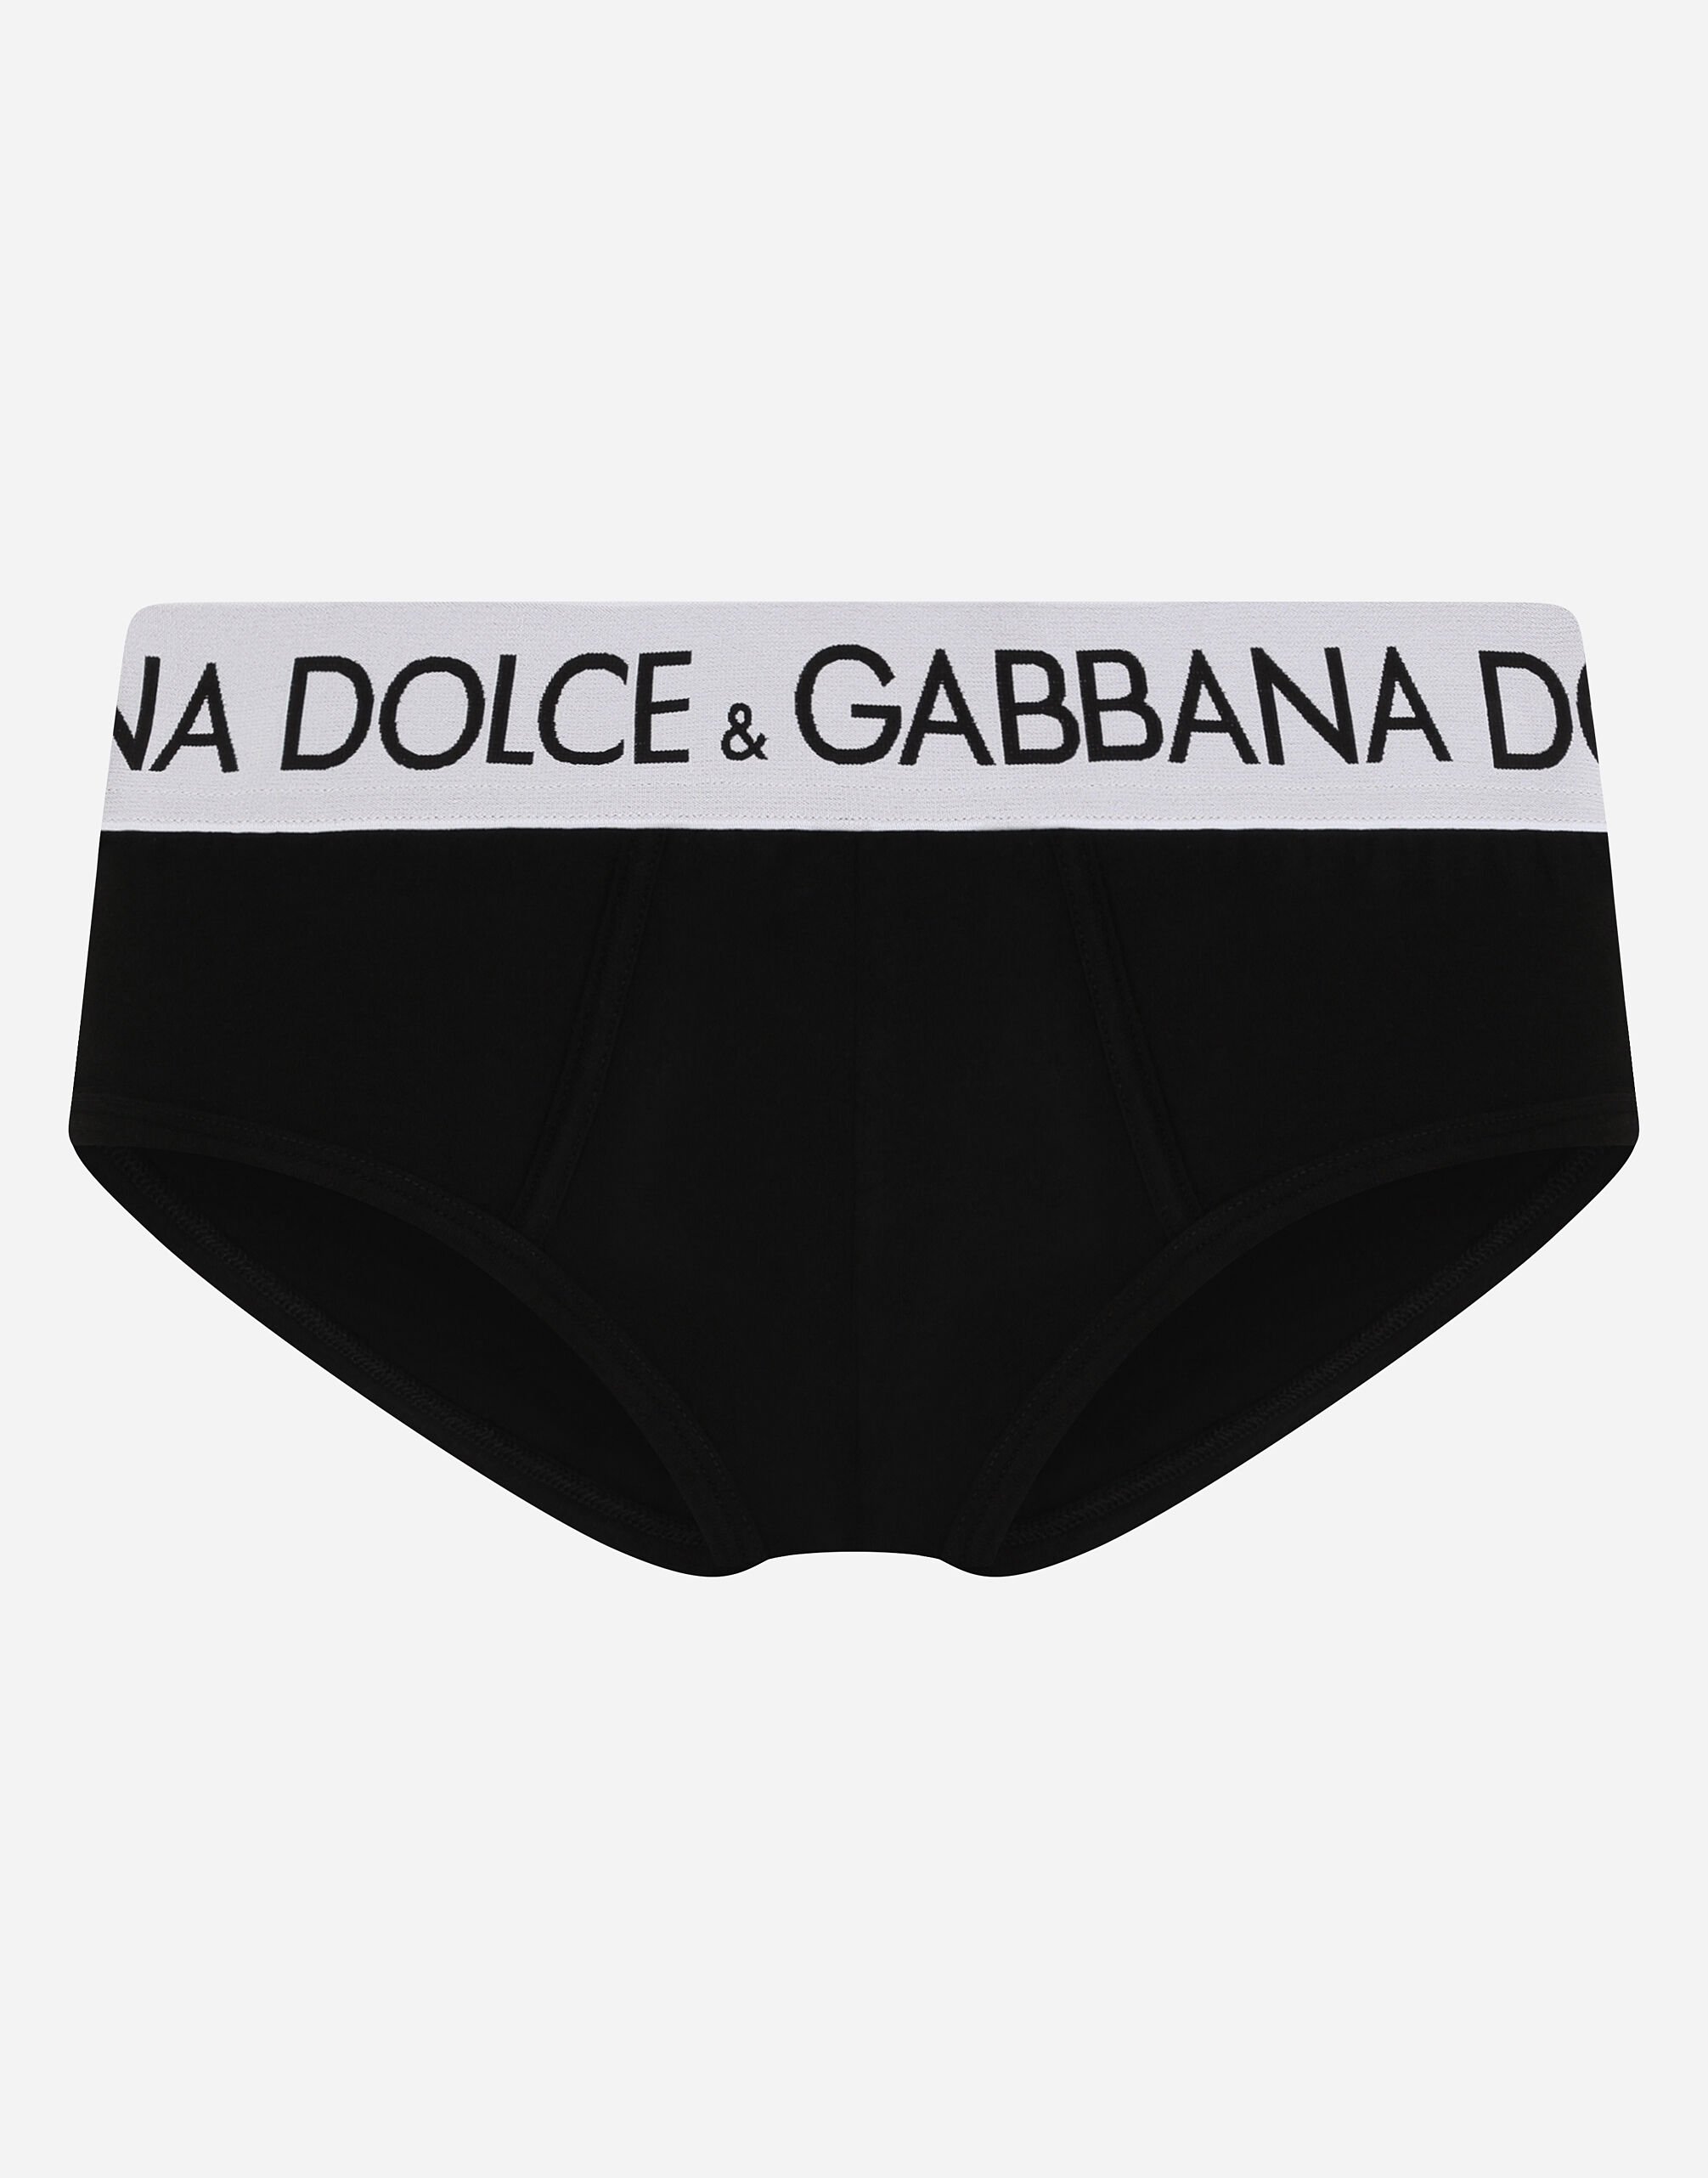 Dolce & Gabbana Brando two-way stretch jersey briefs White M4E67JOUAIG